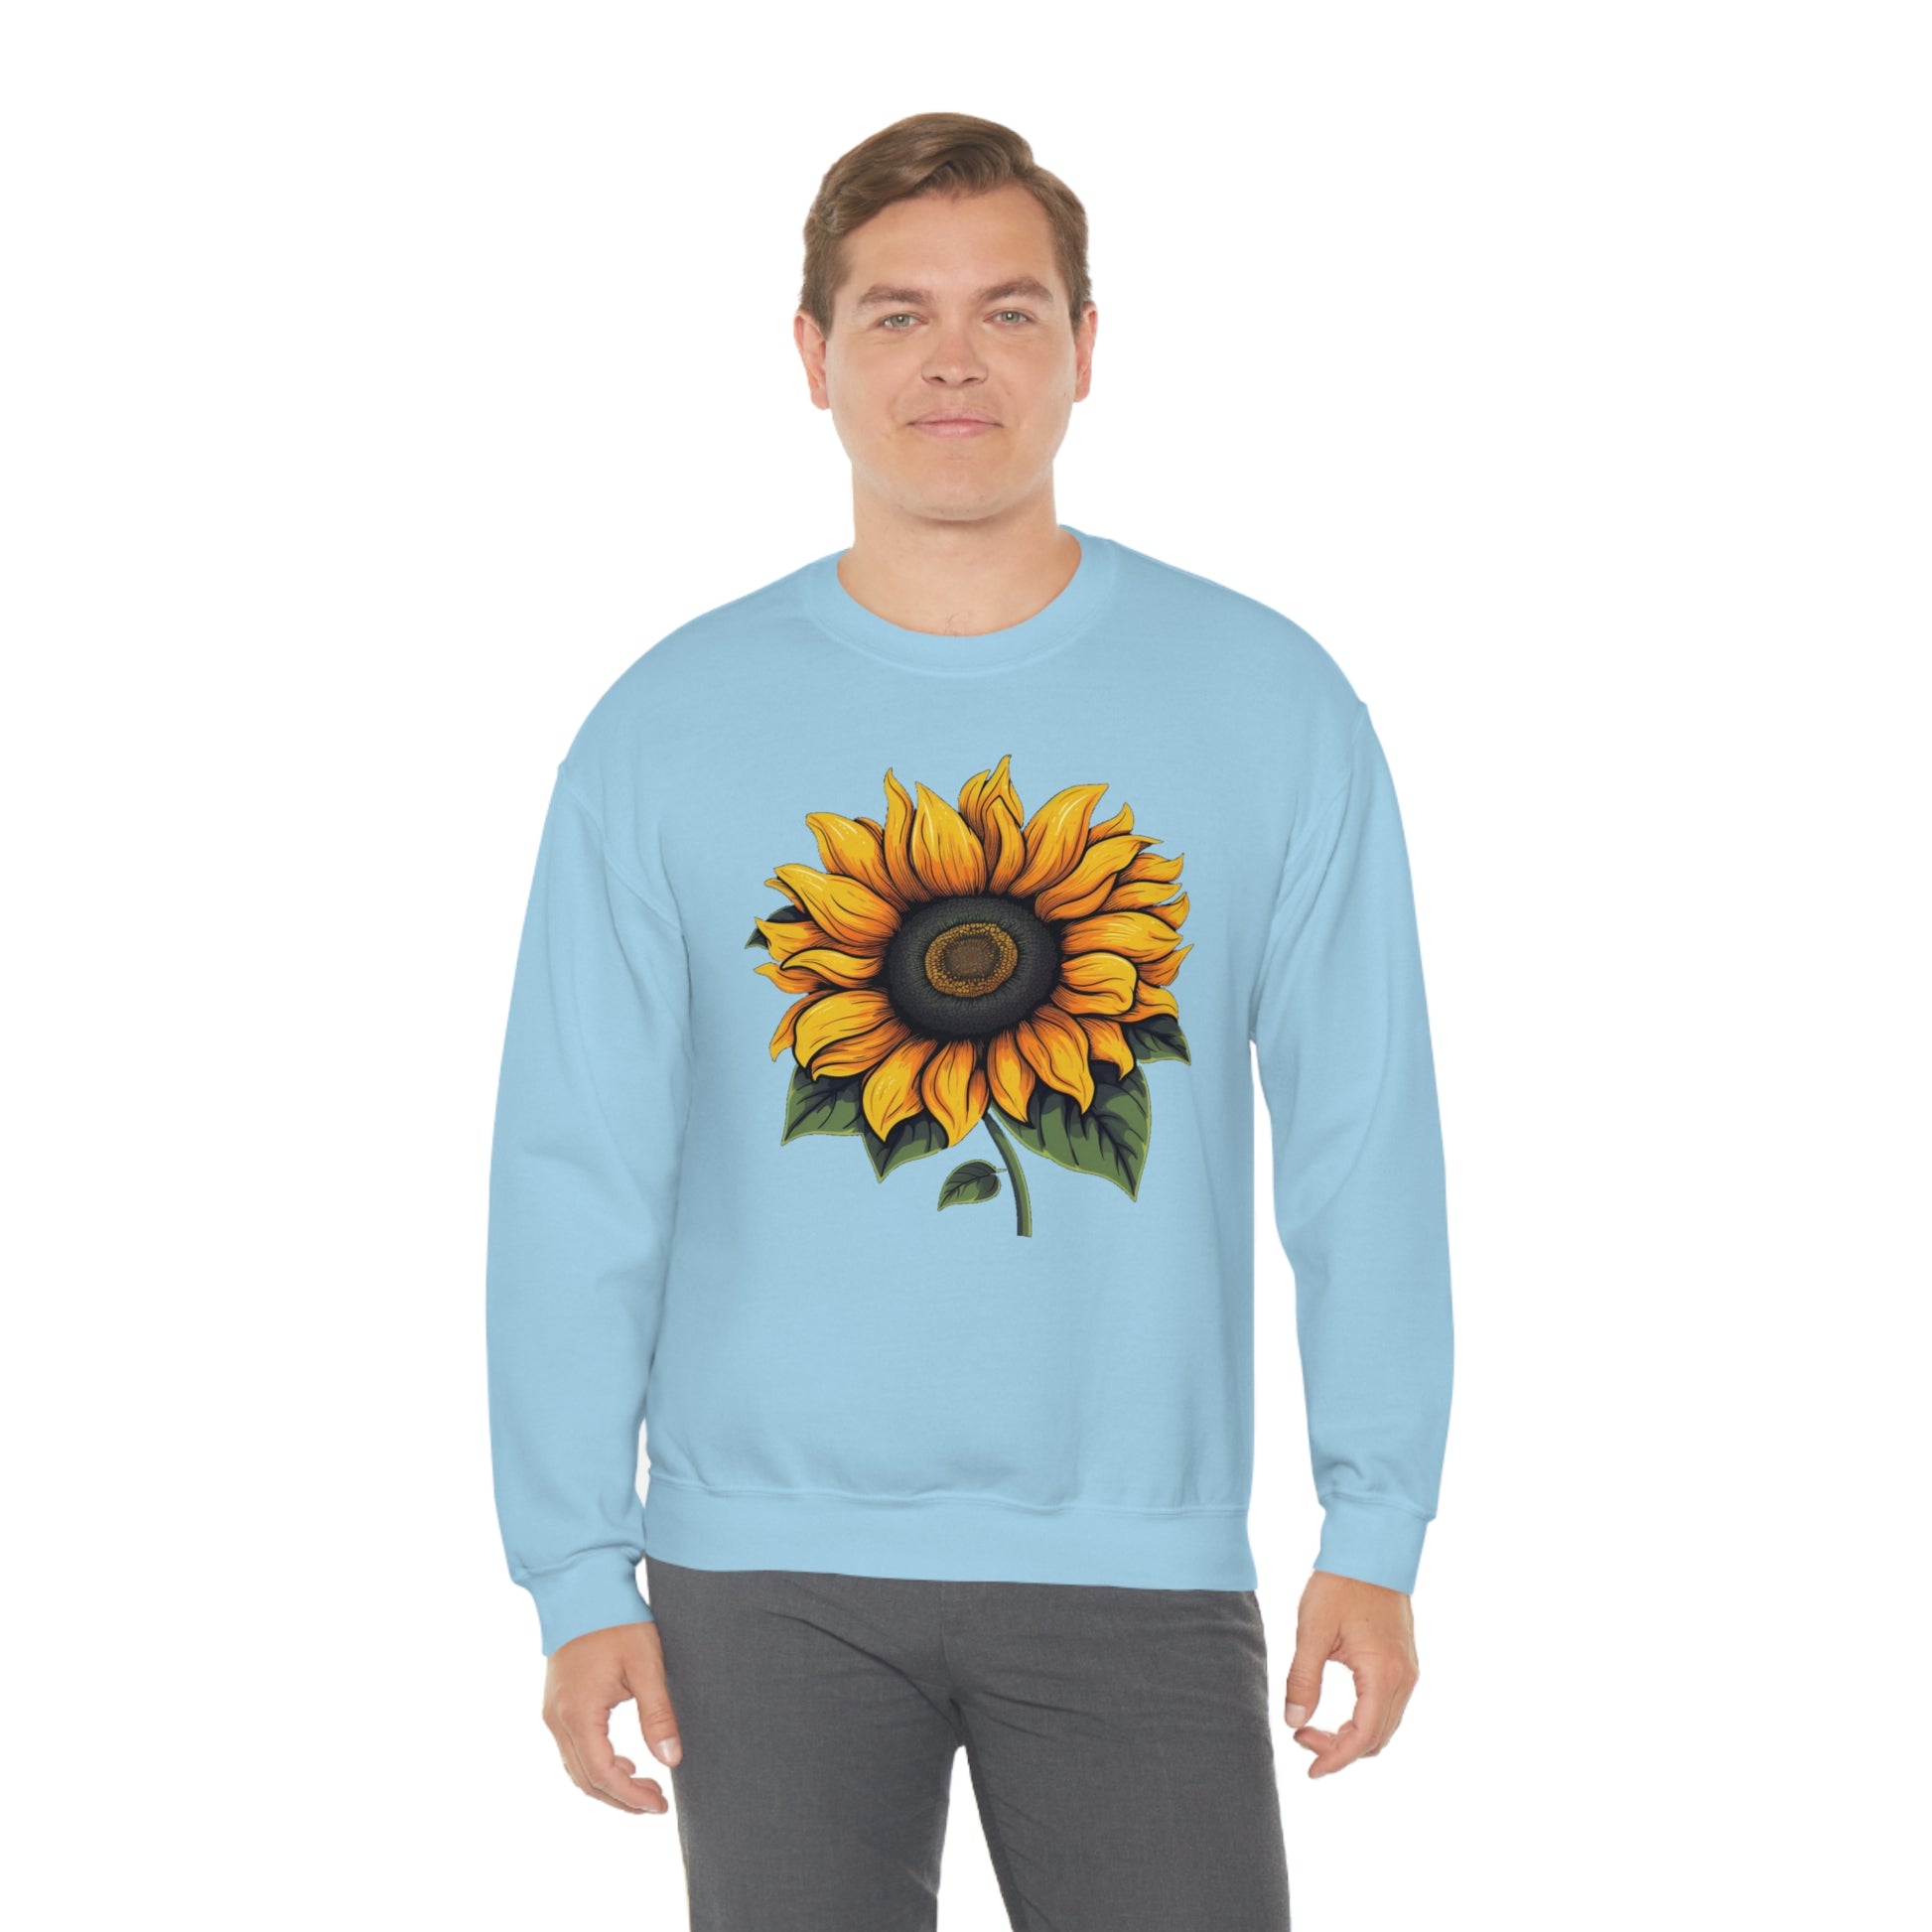 Sunflower Sweatshirt, Yellow Flowers Floral Graphic Crewneck Cotton Sweater Jumper Pullover Men Women Aesthetic Designer Top Starcove Fashion